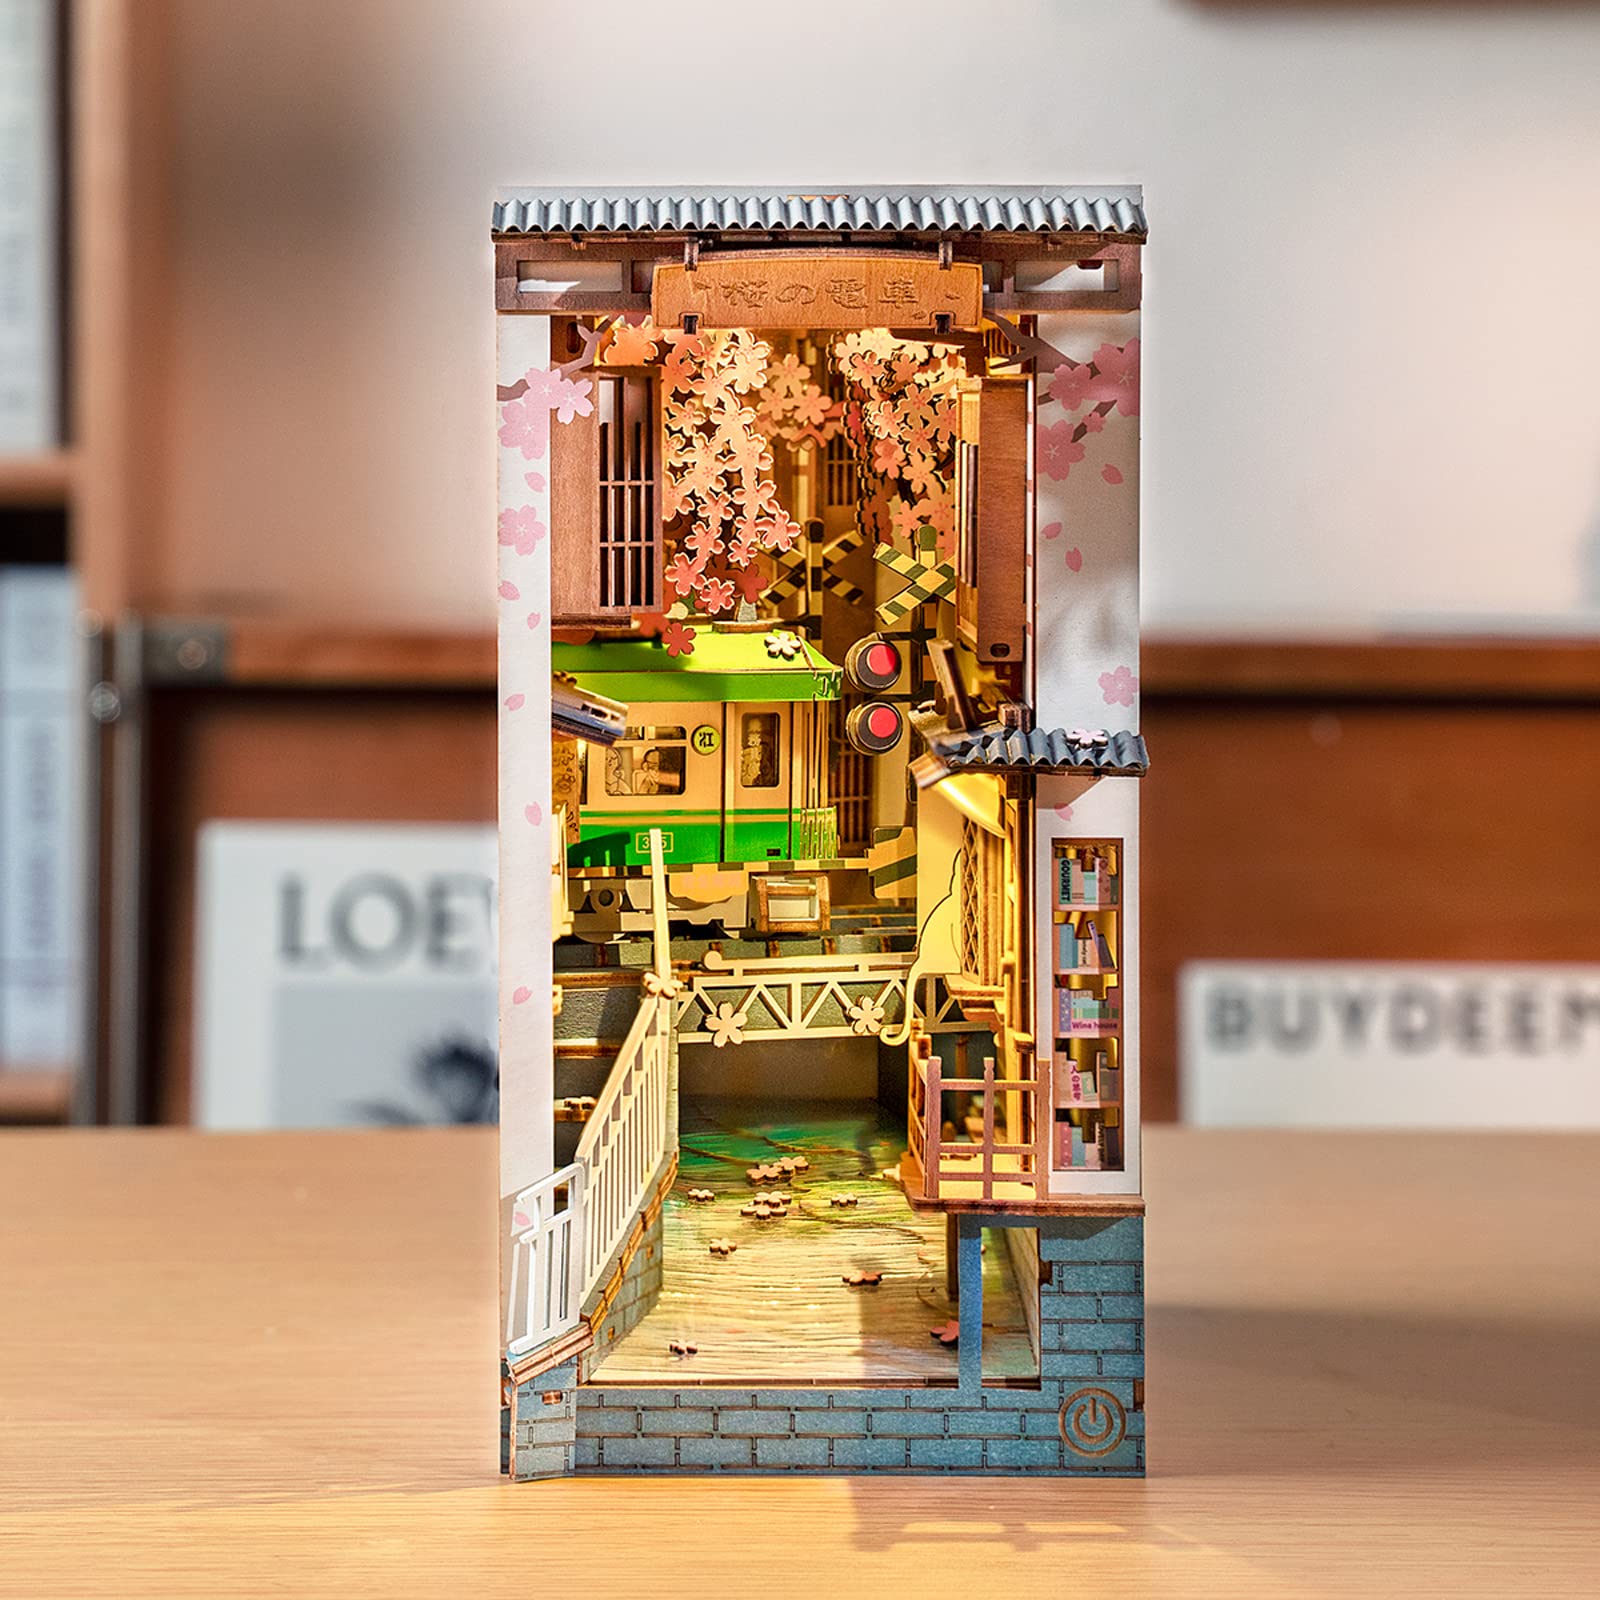 Rolife DIY Book Nook Kit 3D Wooden Puzzle, Bookshelf Insert Decor with LED DIY Bookend Diorama Miniature Kit Crafts Hobbies Gifts for Adults/Teens (Sakura Densya)